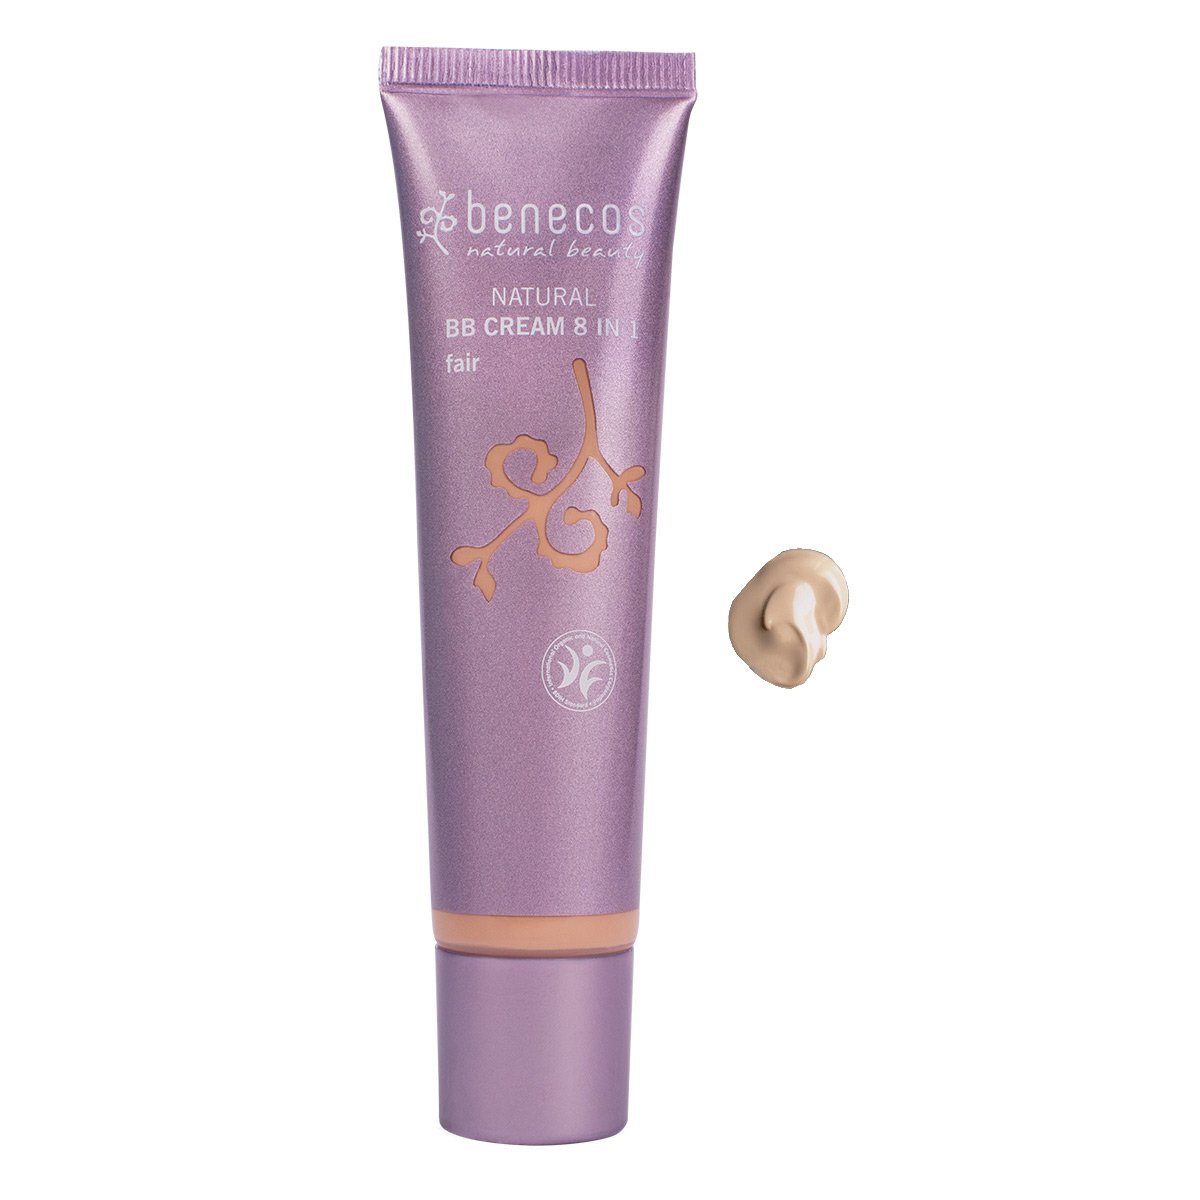 Benecos Natural BB Cream 8 in 1 - Fair - 30ml